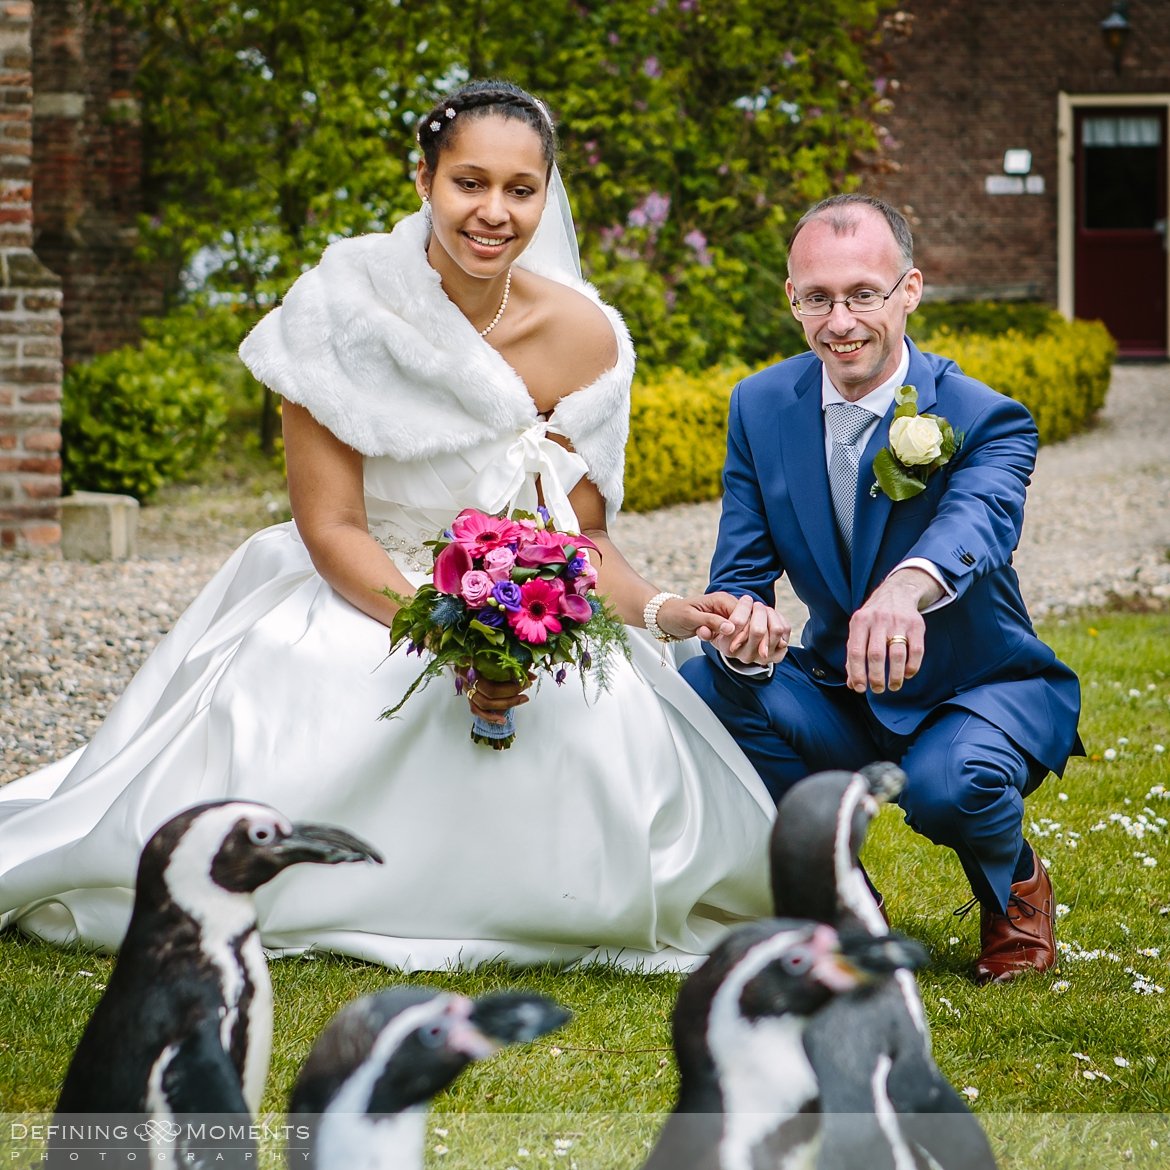 pinguins ournalistiek trouwfotograaf lambertuskerk raamsdonk documentair bruidsfotograaf authentieke natuurlijke bruidsfotografie trouwfotografie breda kerkelijk huwelijk bruidsreportage trouwreportage